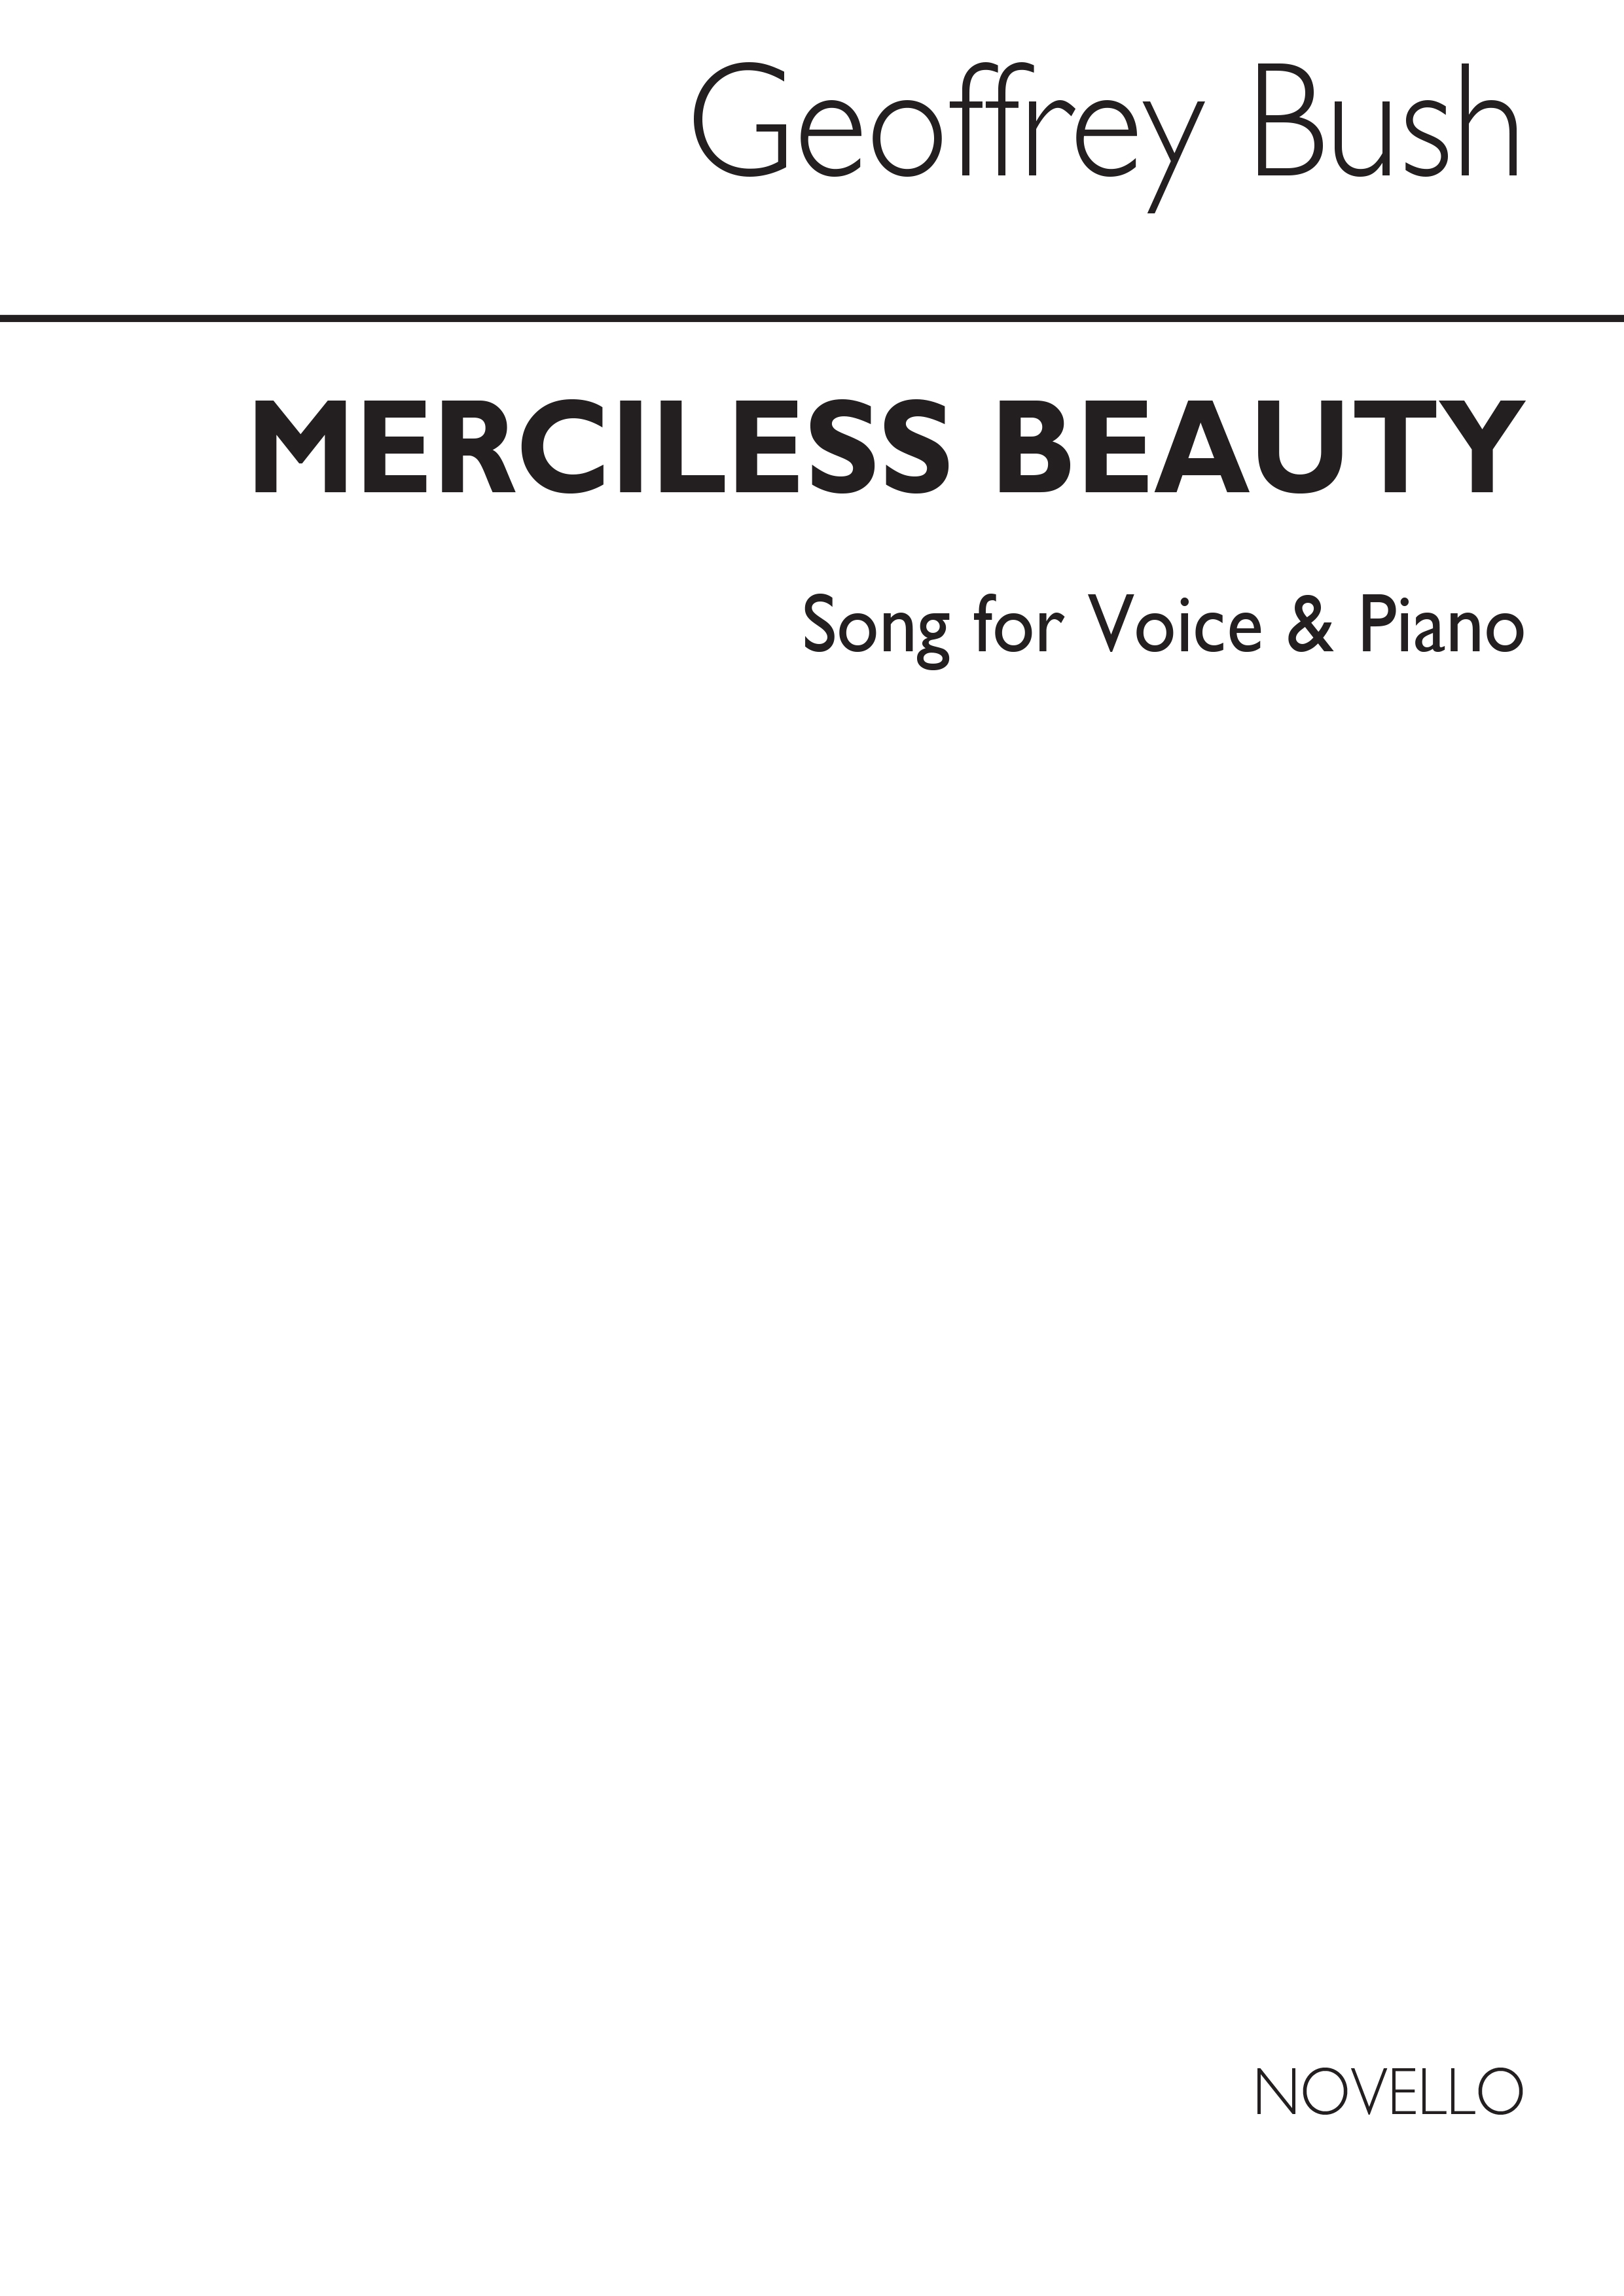 Geoffrey Bush: Merciless Beauty for Baritone and Piano